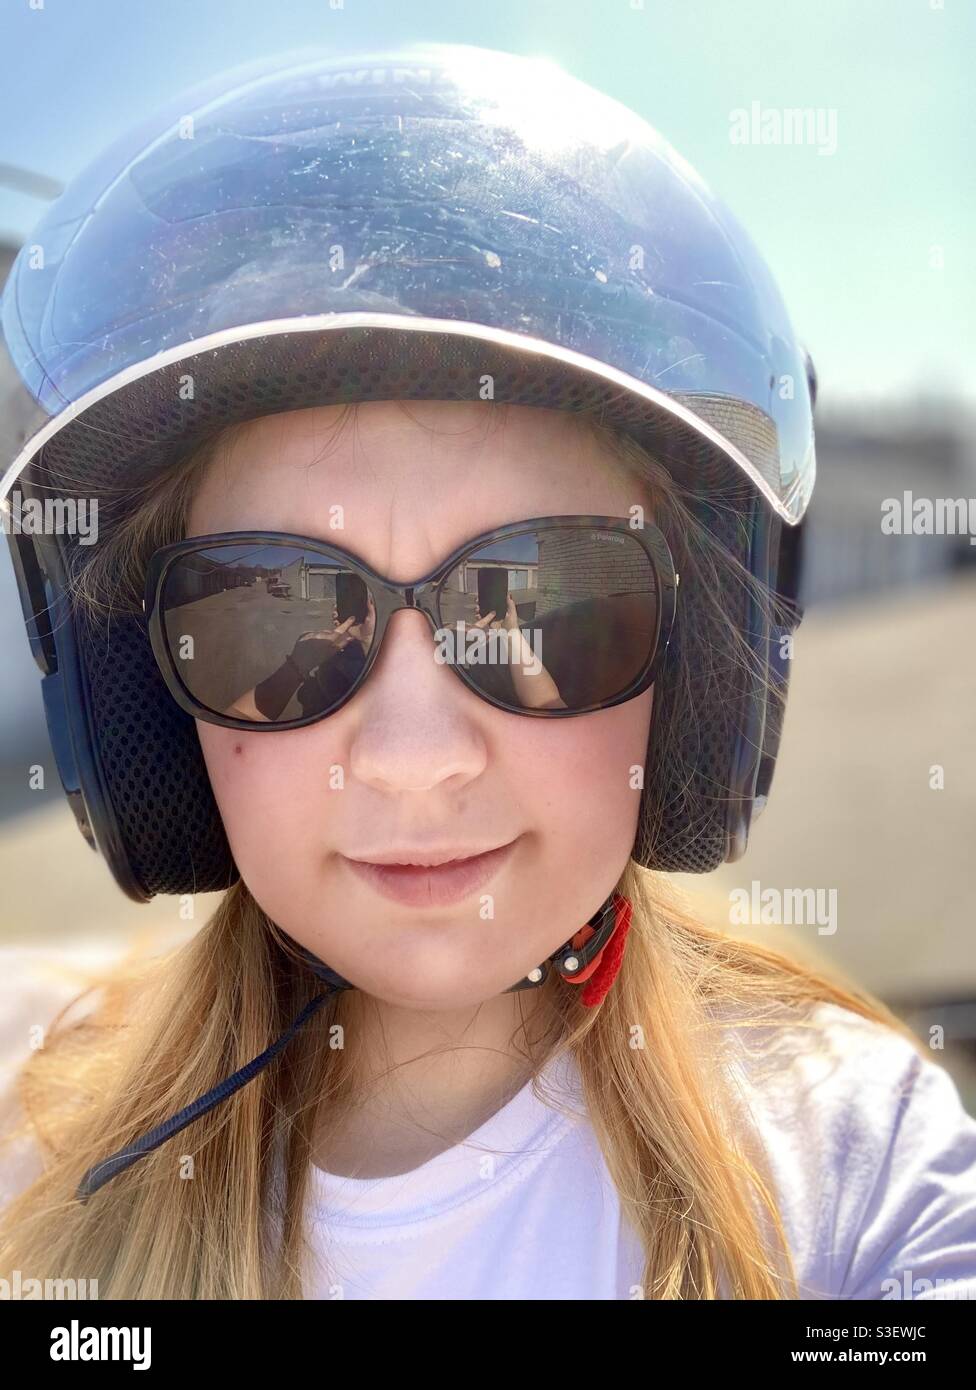 Mujer con casco de moto fotografías e imágenes de alta resolución - Alamy